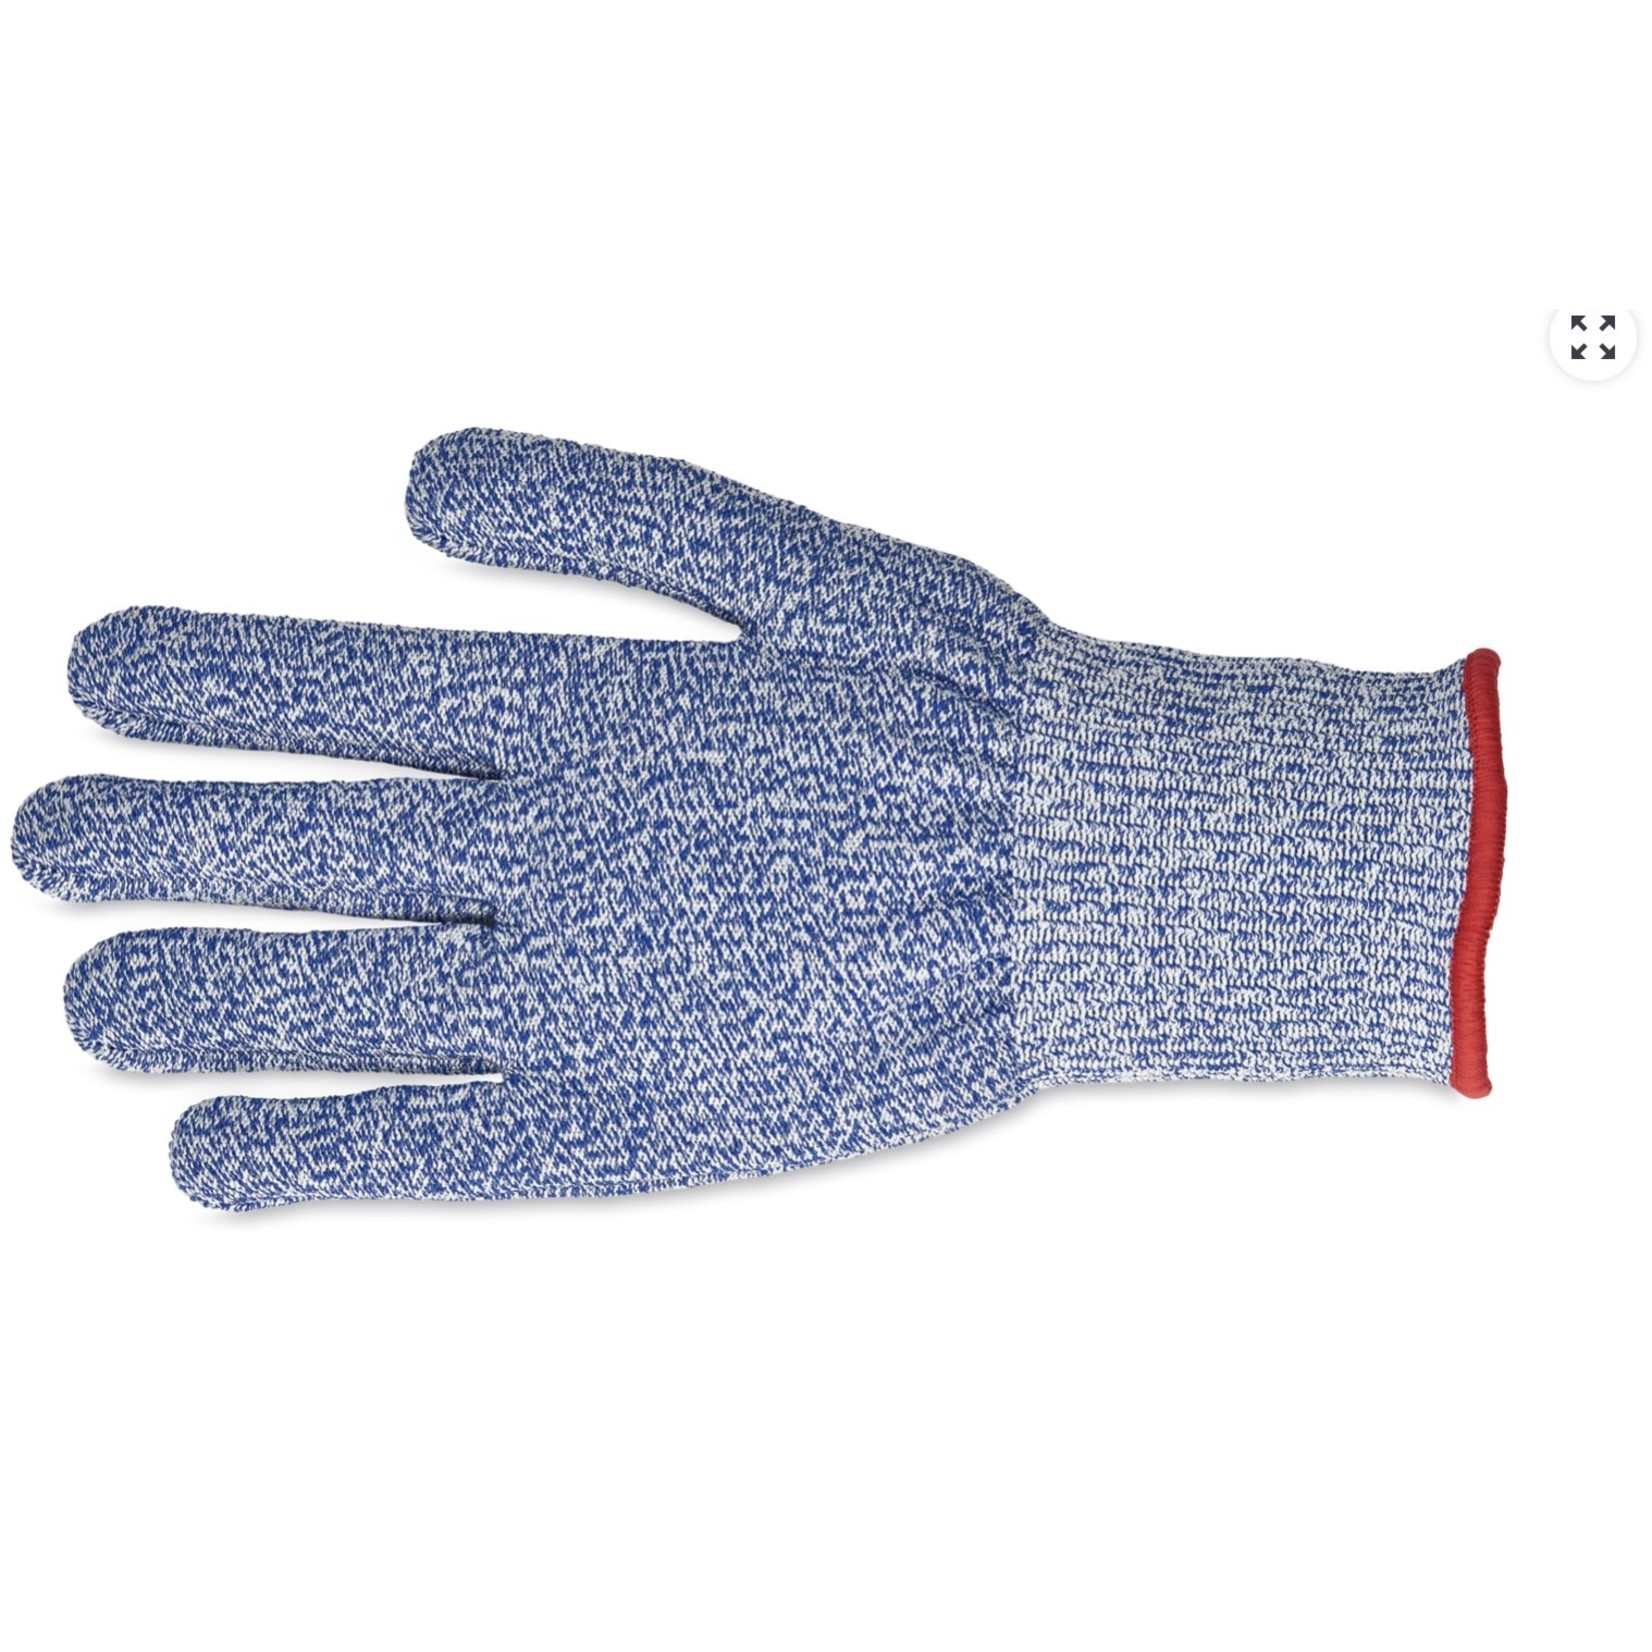 WUSTHOF WUSTHOF Cut Resistant Glove Large